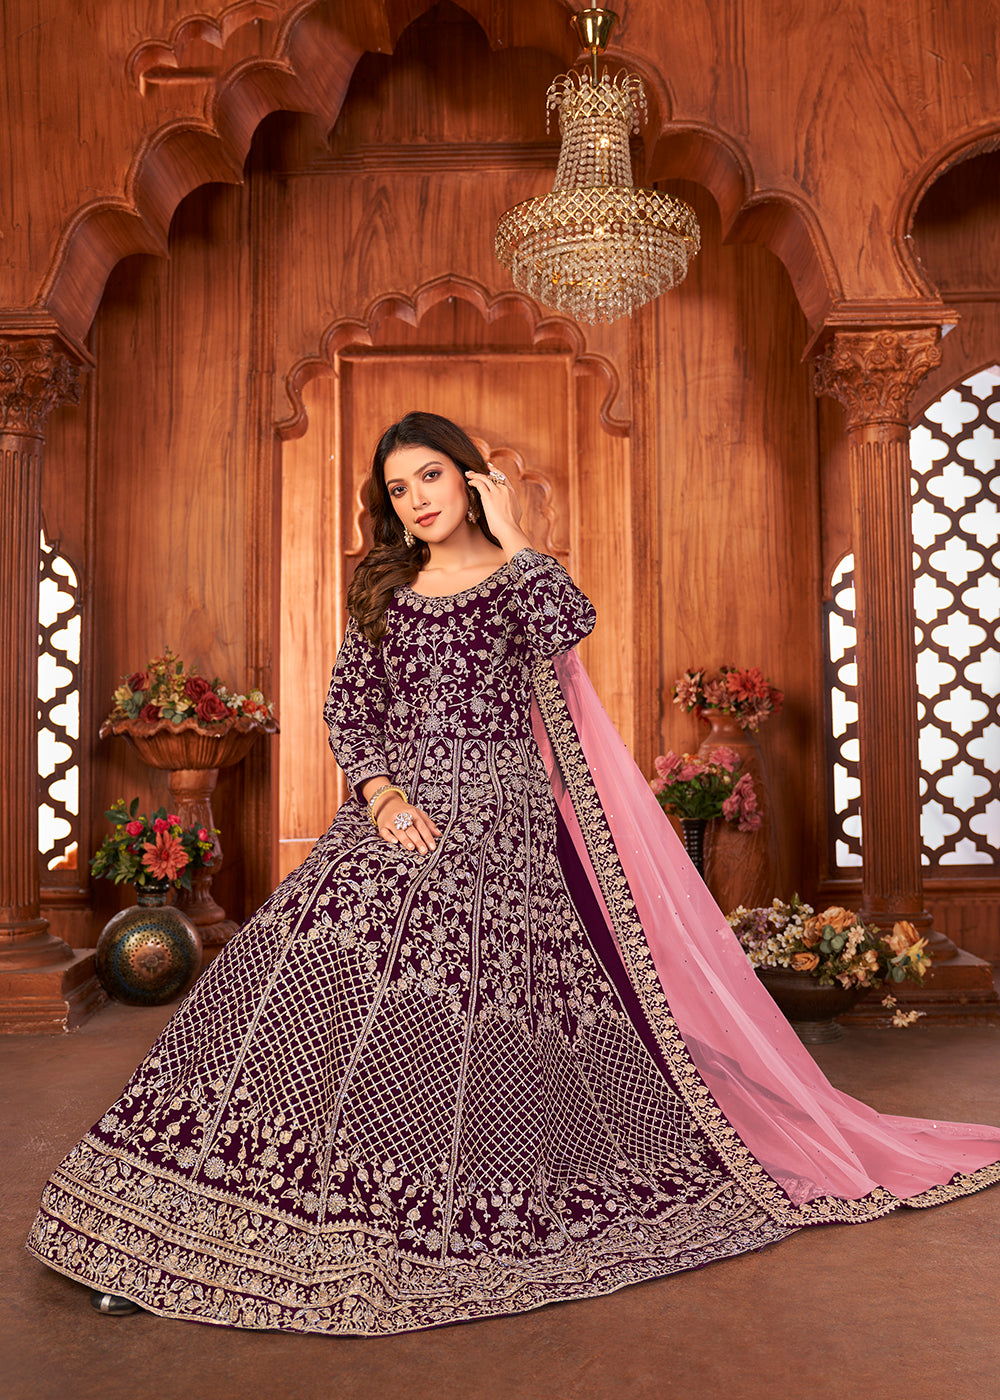 Buy Now Radiant Purple Velvet Wedding Function Wear Anarkali Suit Online in USA, UK, Australia, New Zealand, Canada & Worldwide at Empress Clothing.